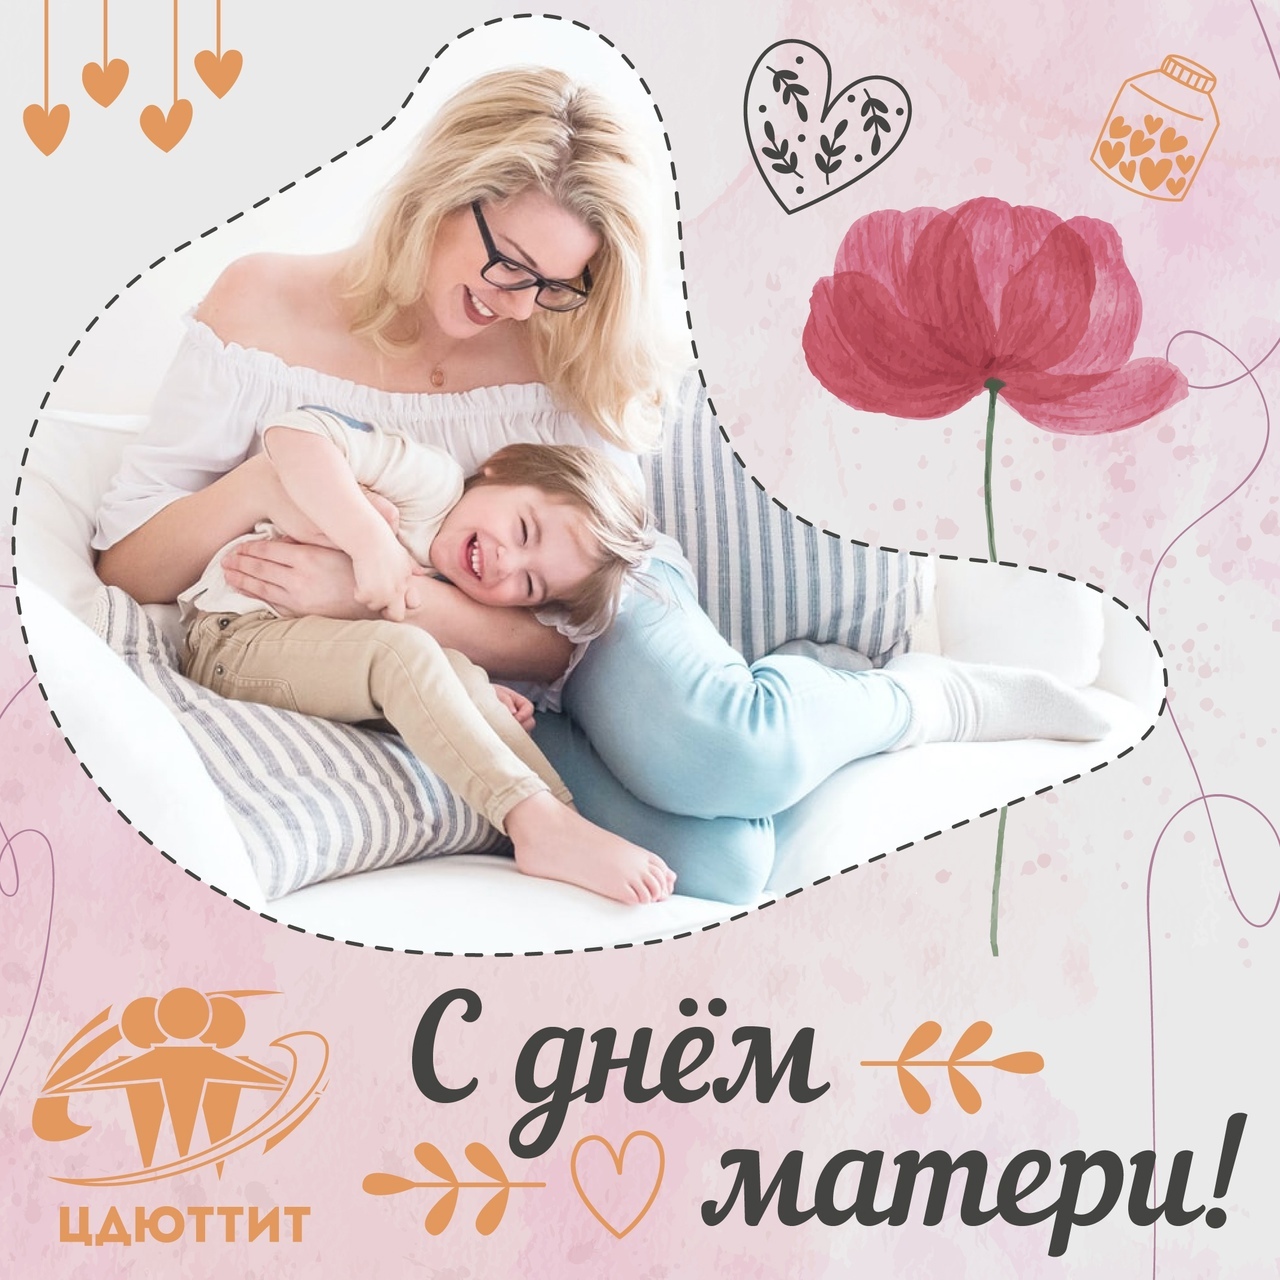 День матери 23 года. День матери. День матери последнее воскресенье. Последнее воскресенье ноября день матери. День матери в России.